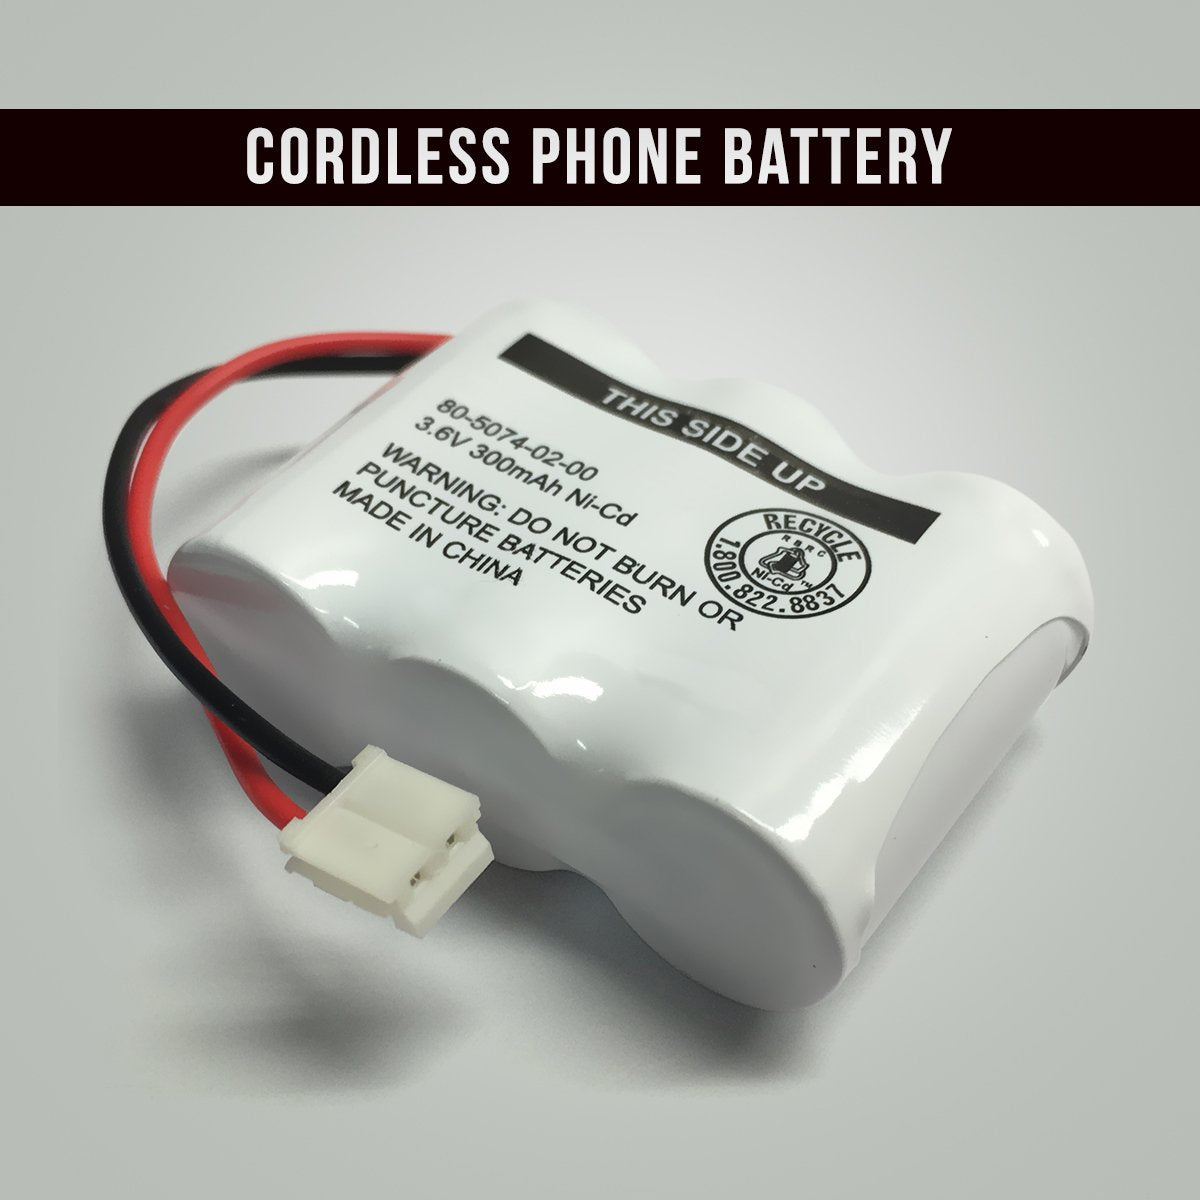 Sharp CL-250 Cordless Phone Battery